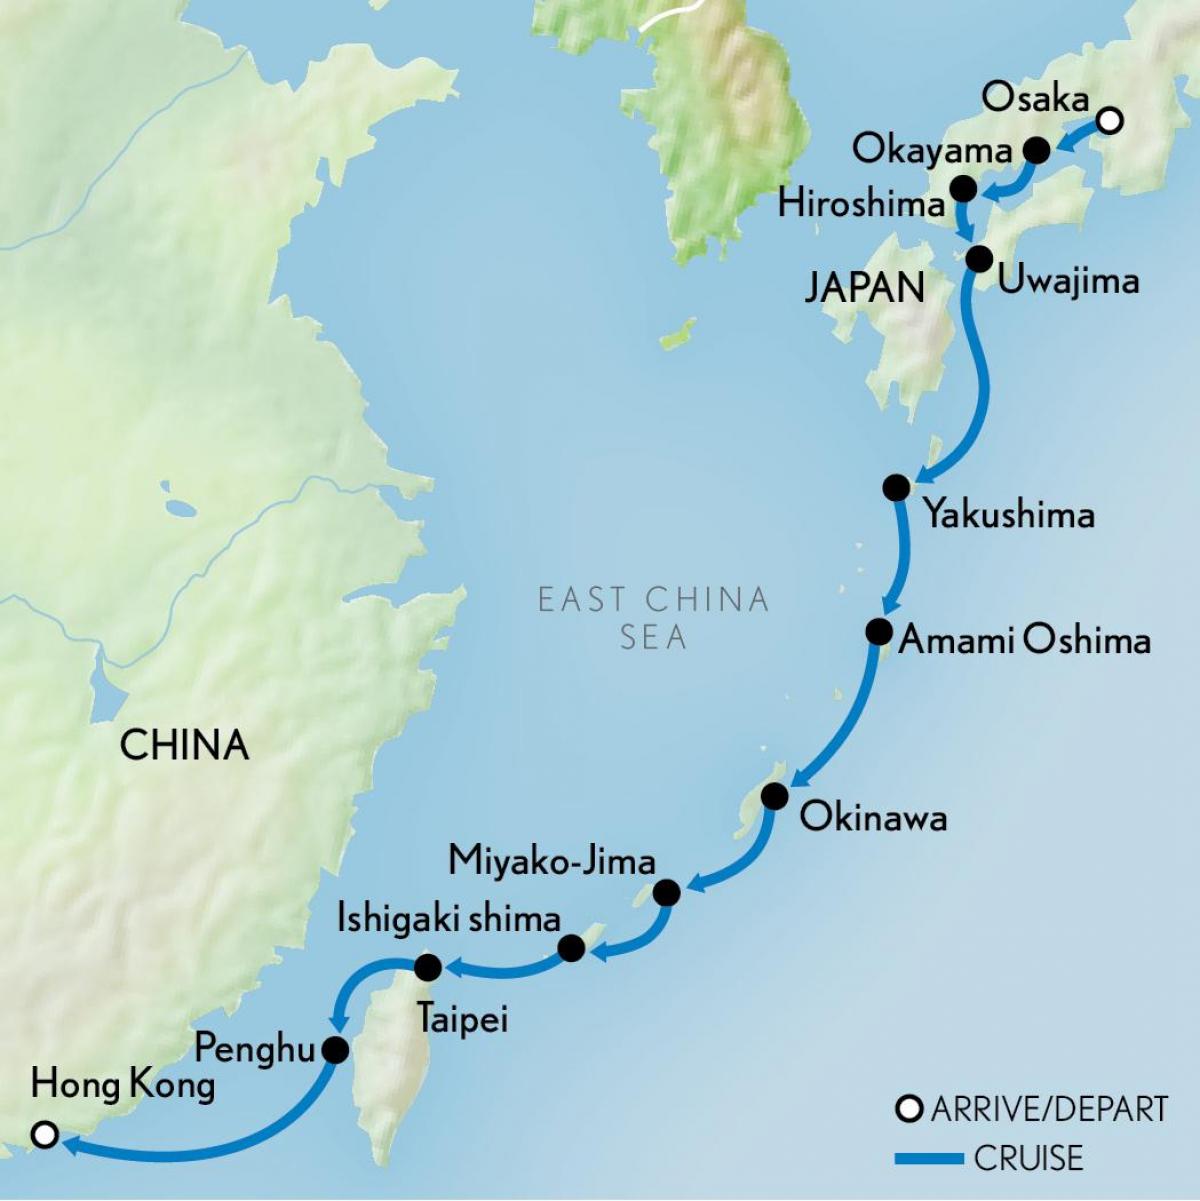 карта Хонг конг и Јапан